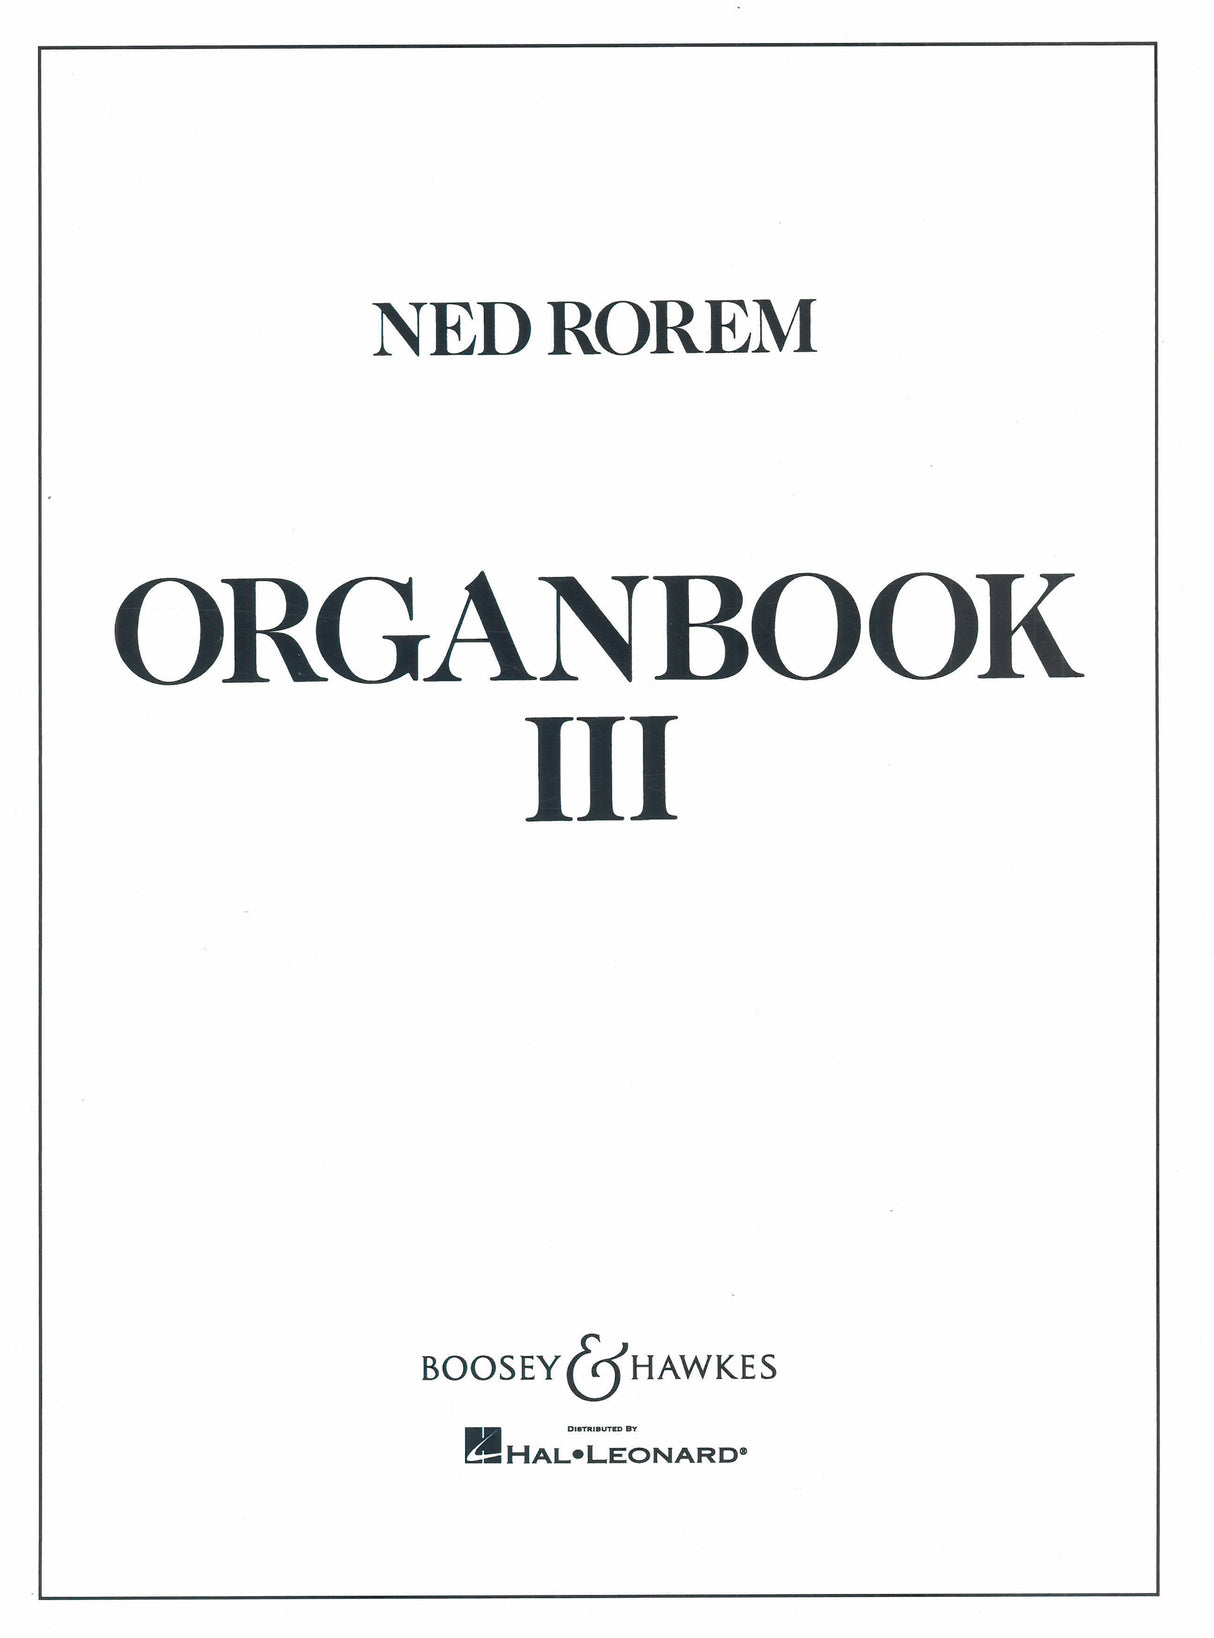 Rorem: Organbook III